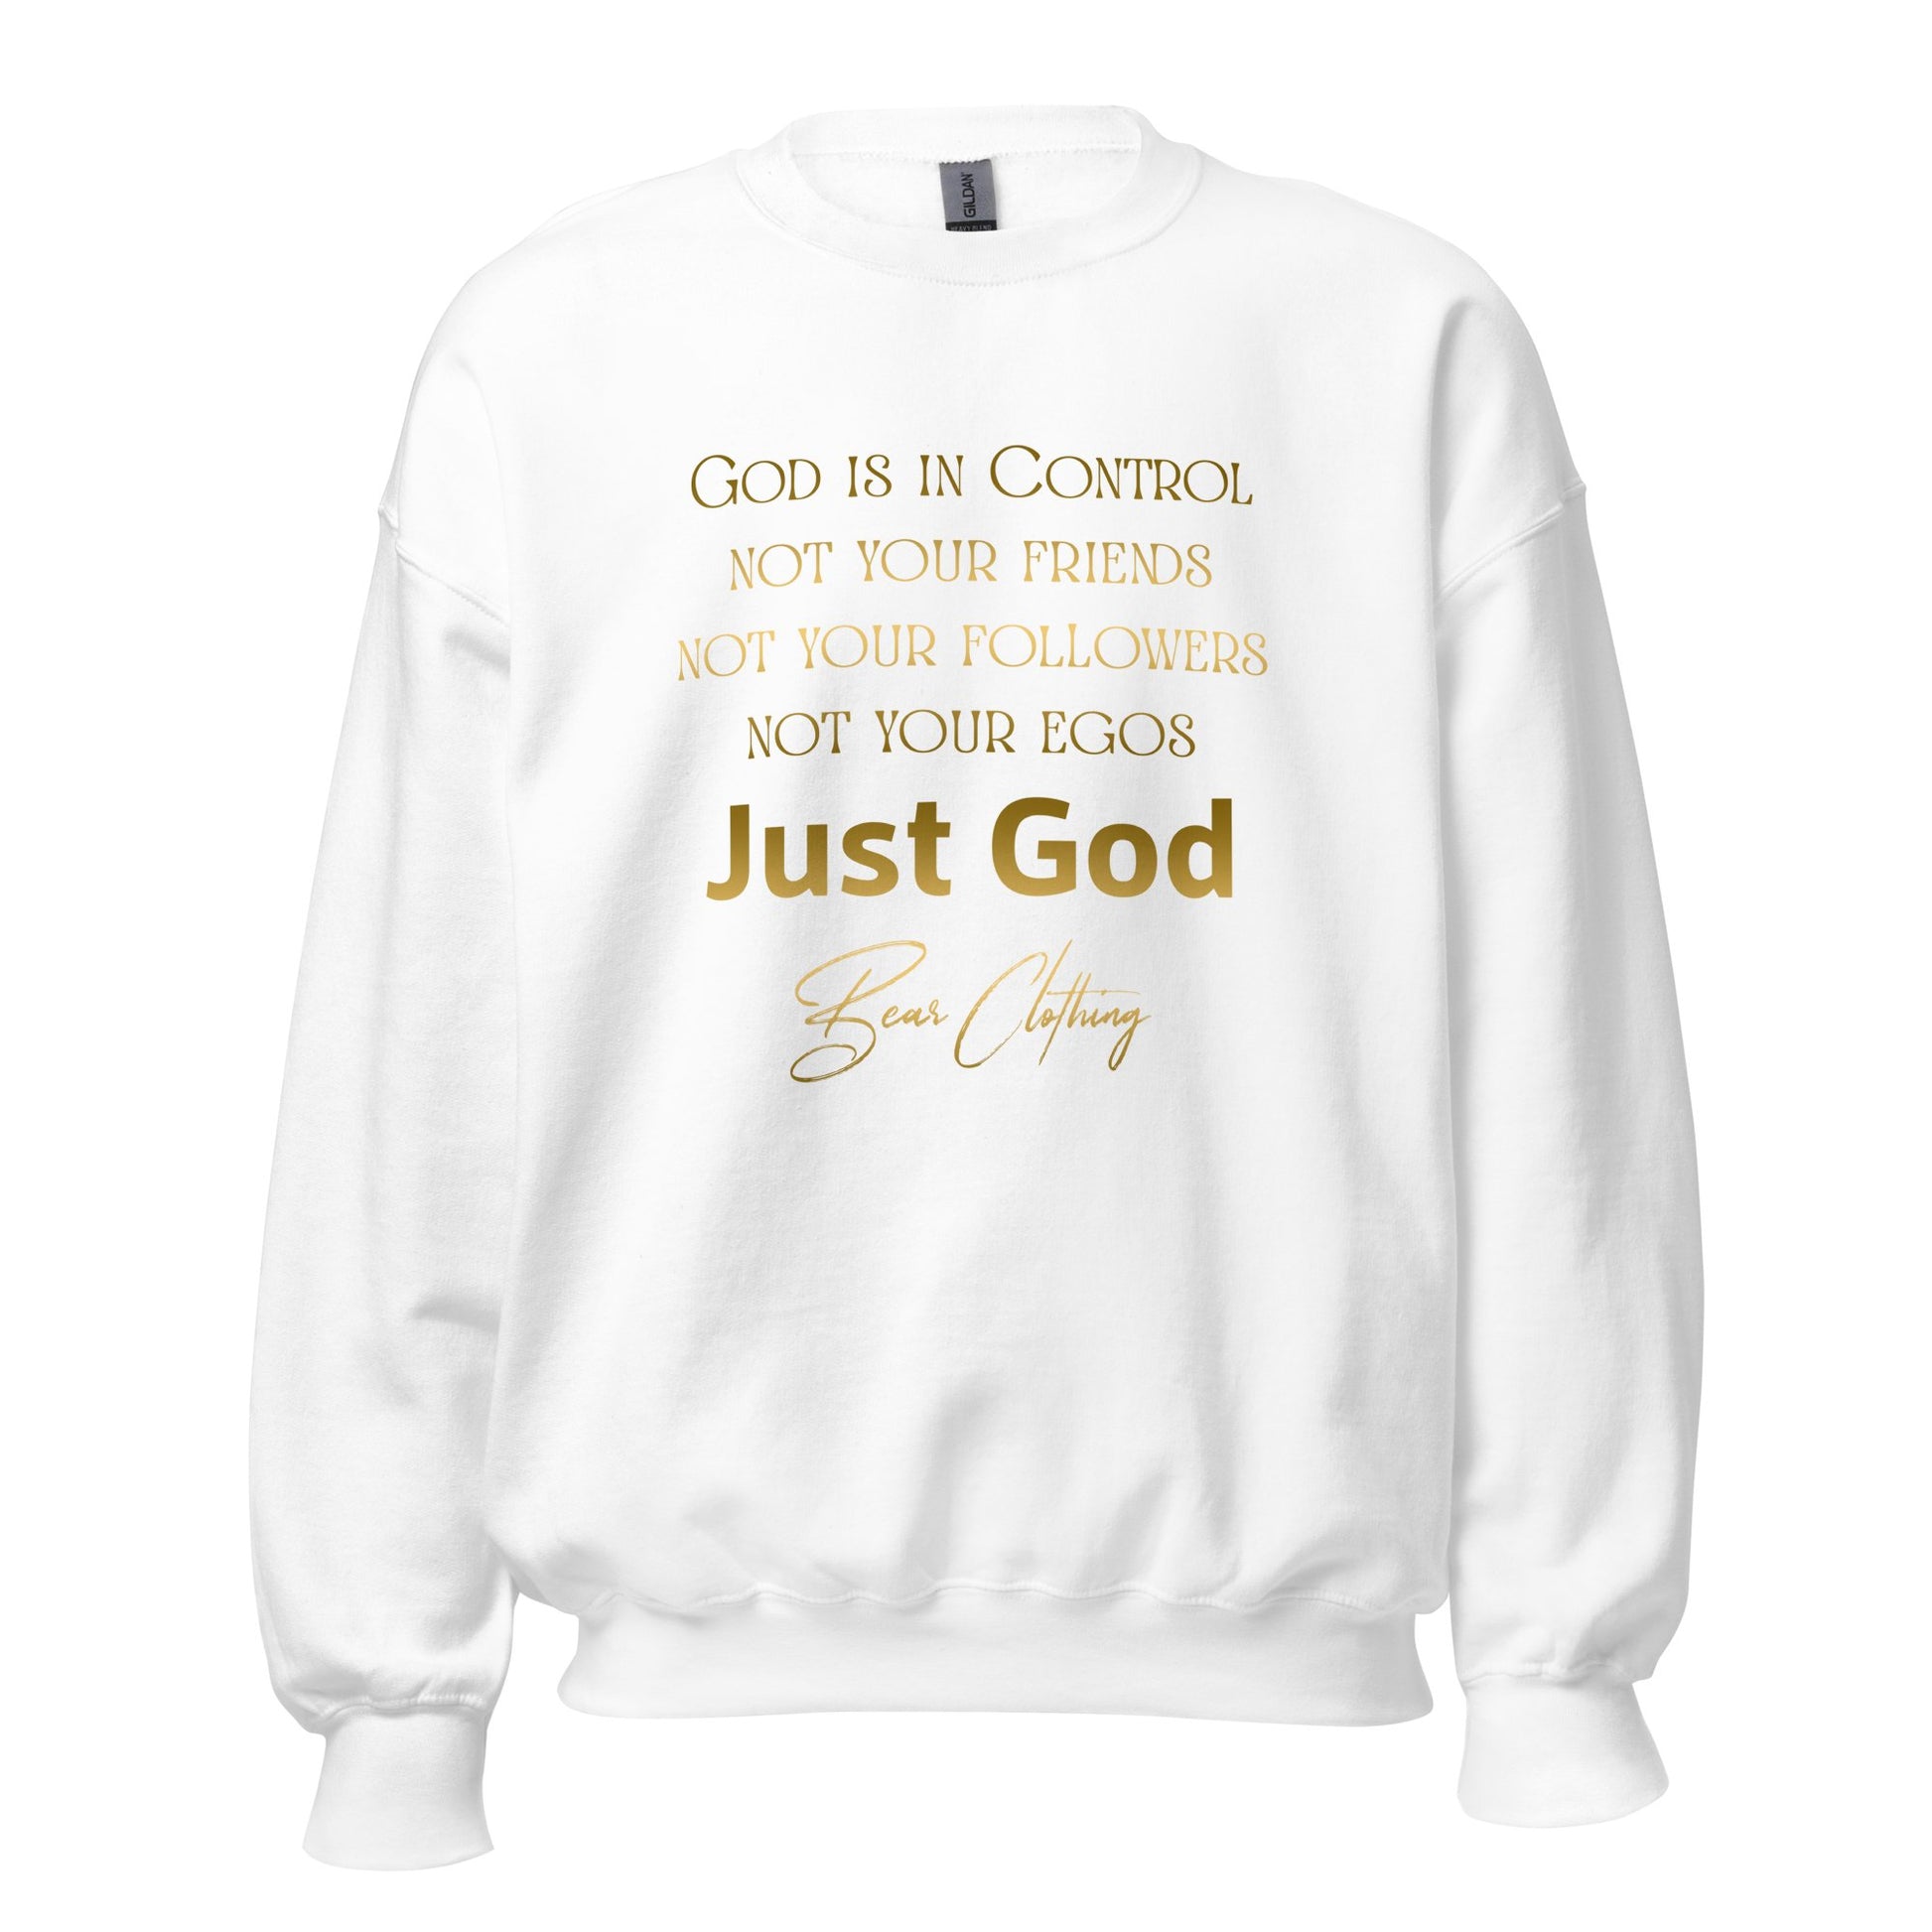 Just God! Gold Print Unisex Sweatshirt - Bearclothing